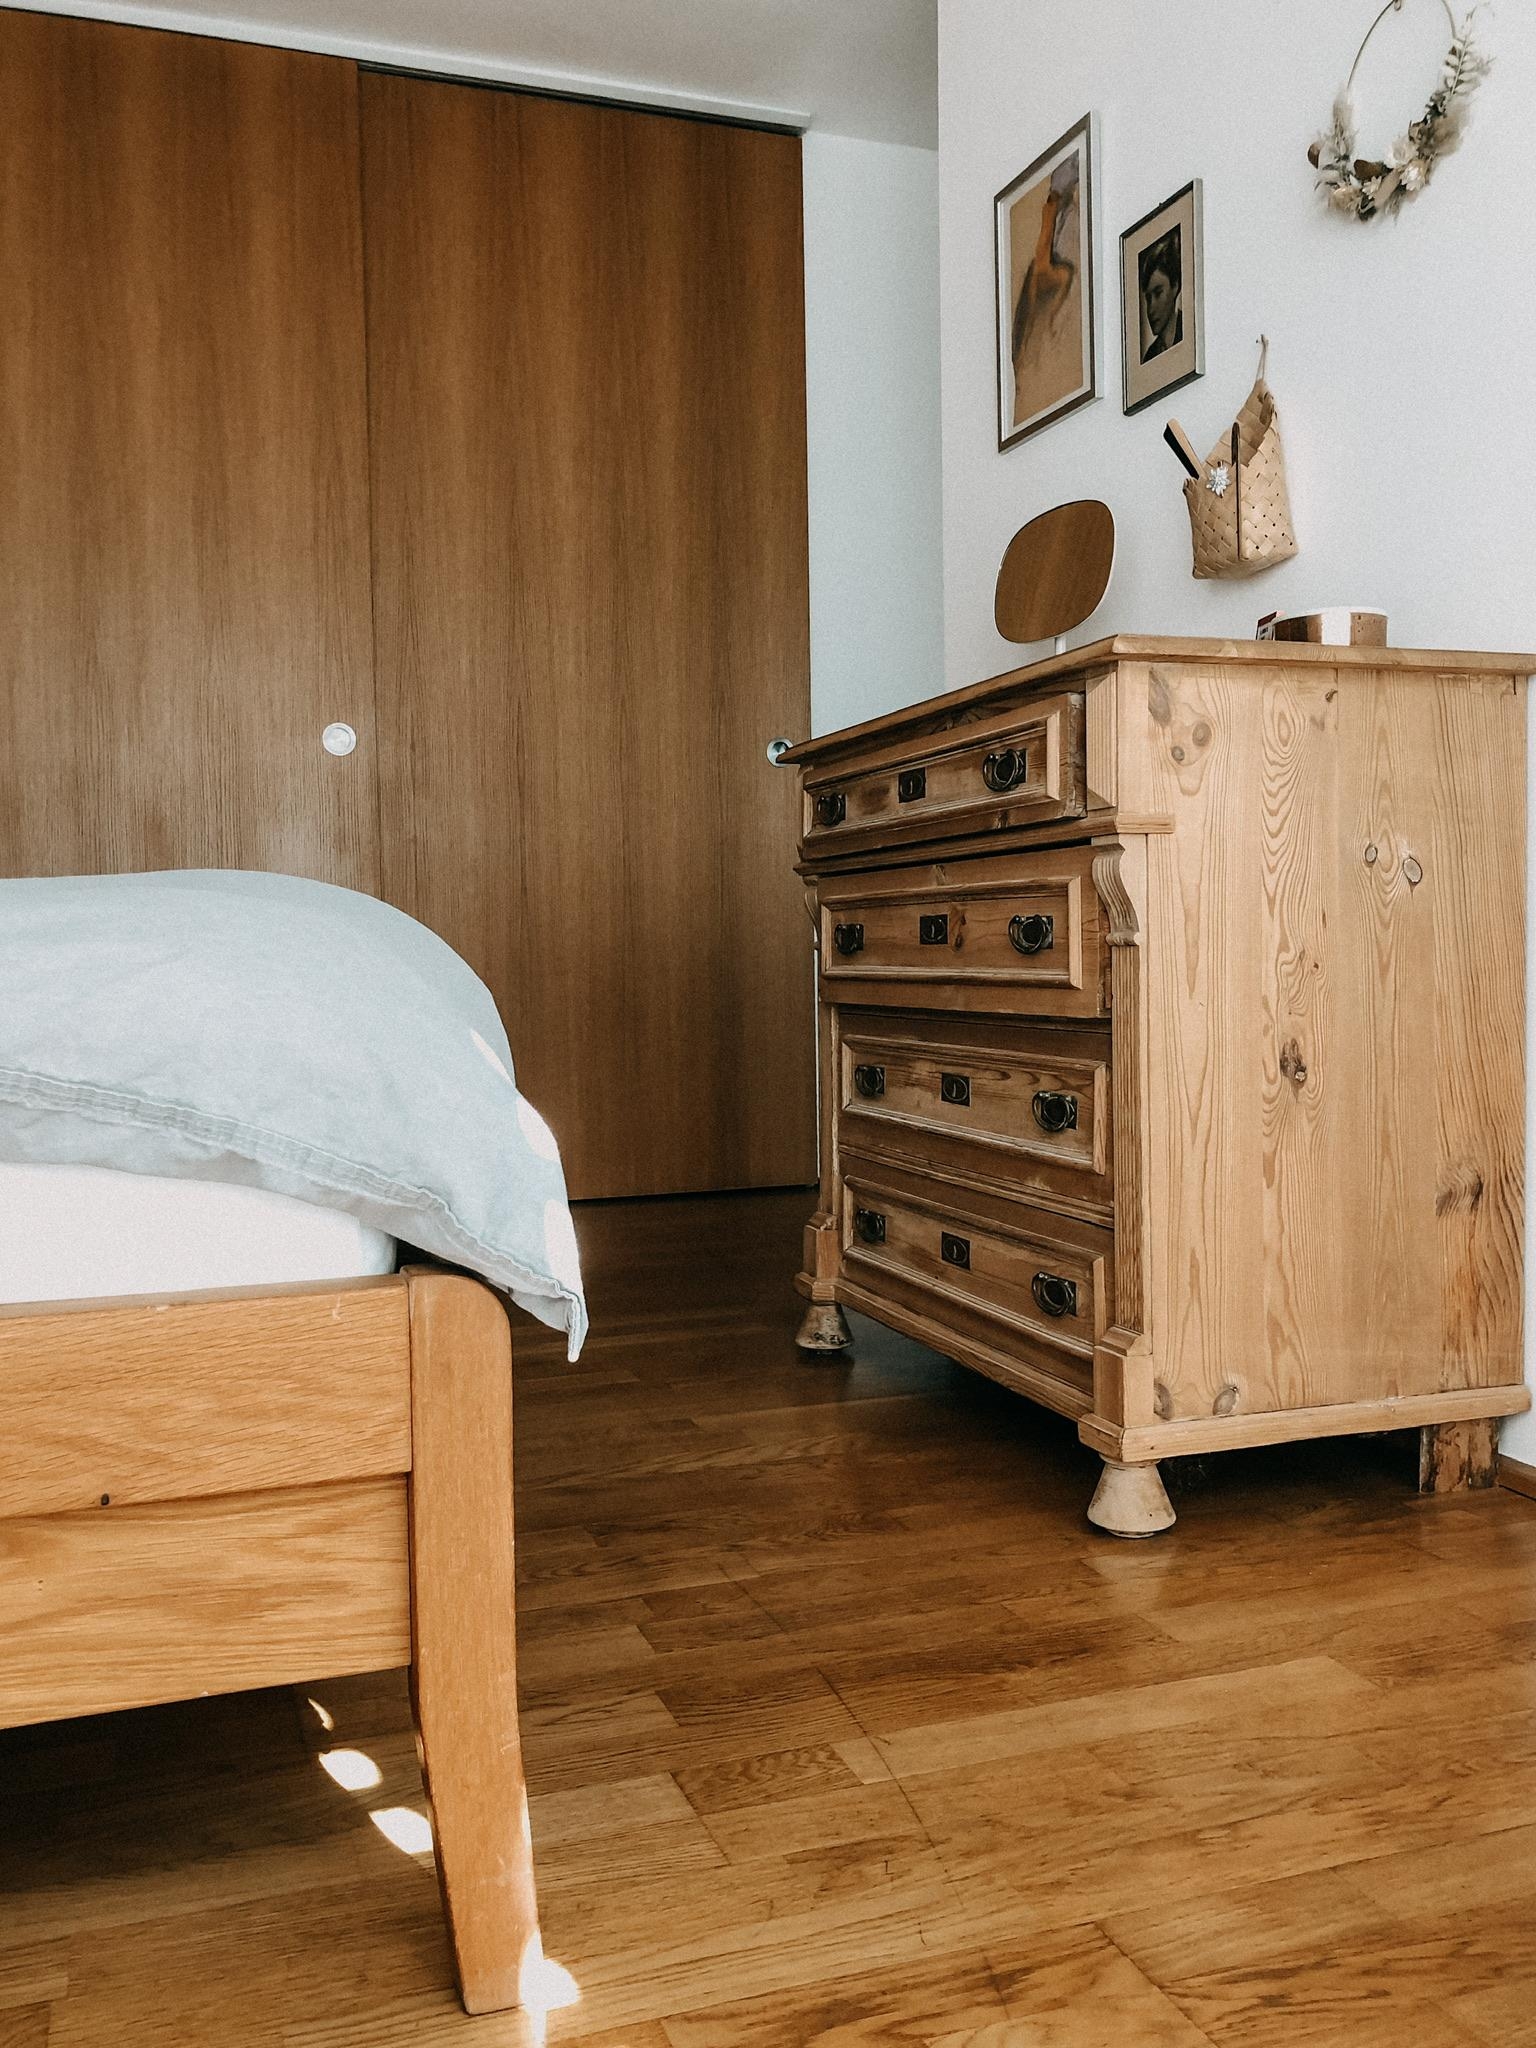 Schlafzimmeridyll
#schlafzimmer #sleepingroom #holzbett #woodenbed #schiebetür #eichenholz #kommode #dresser #oakwood 